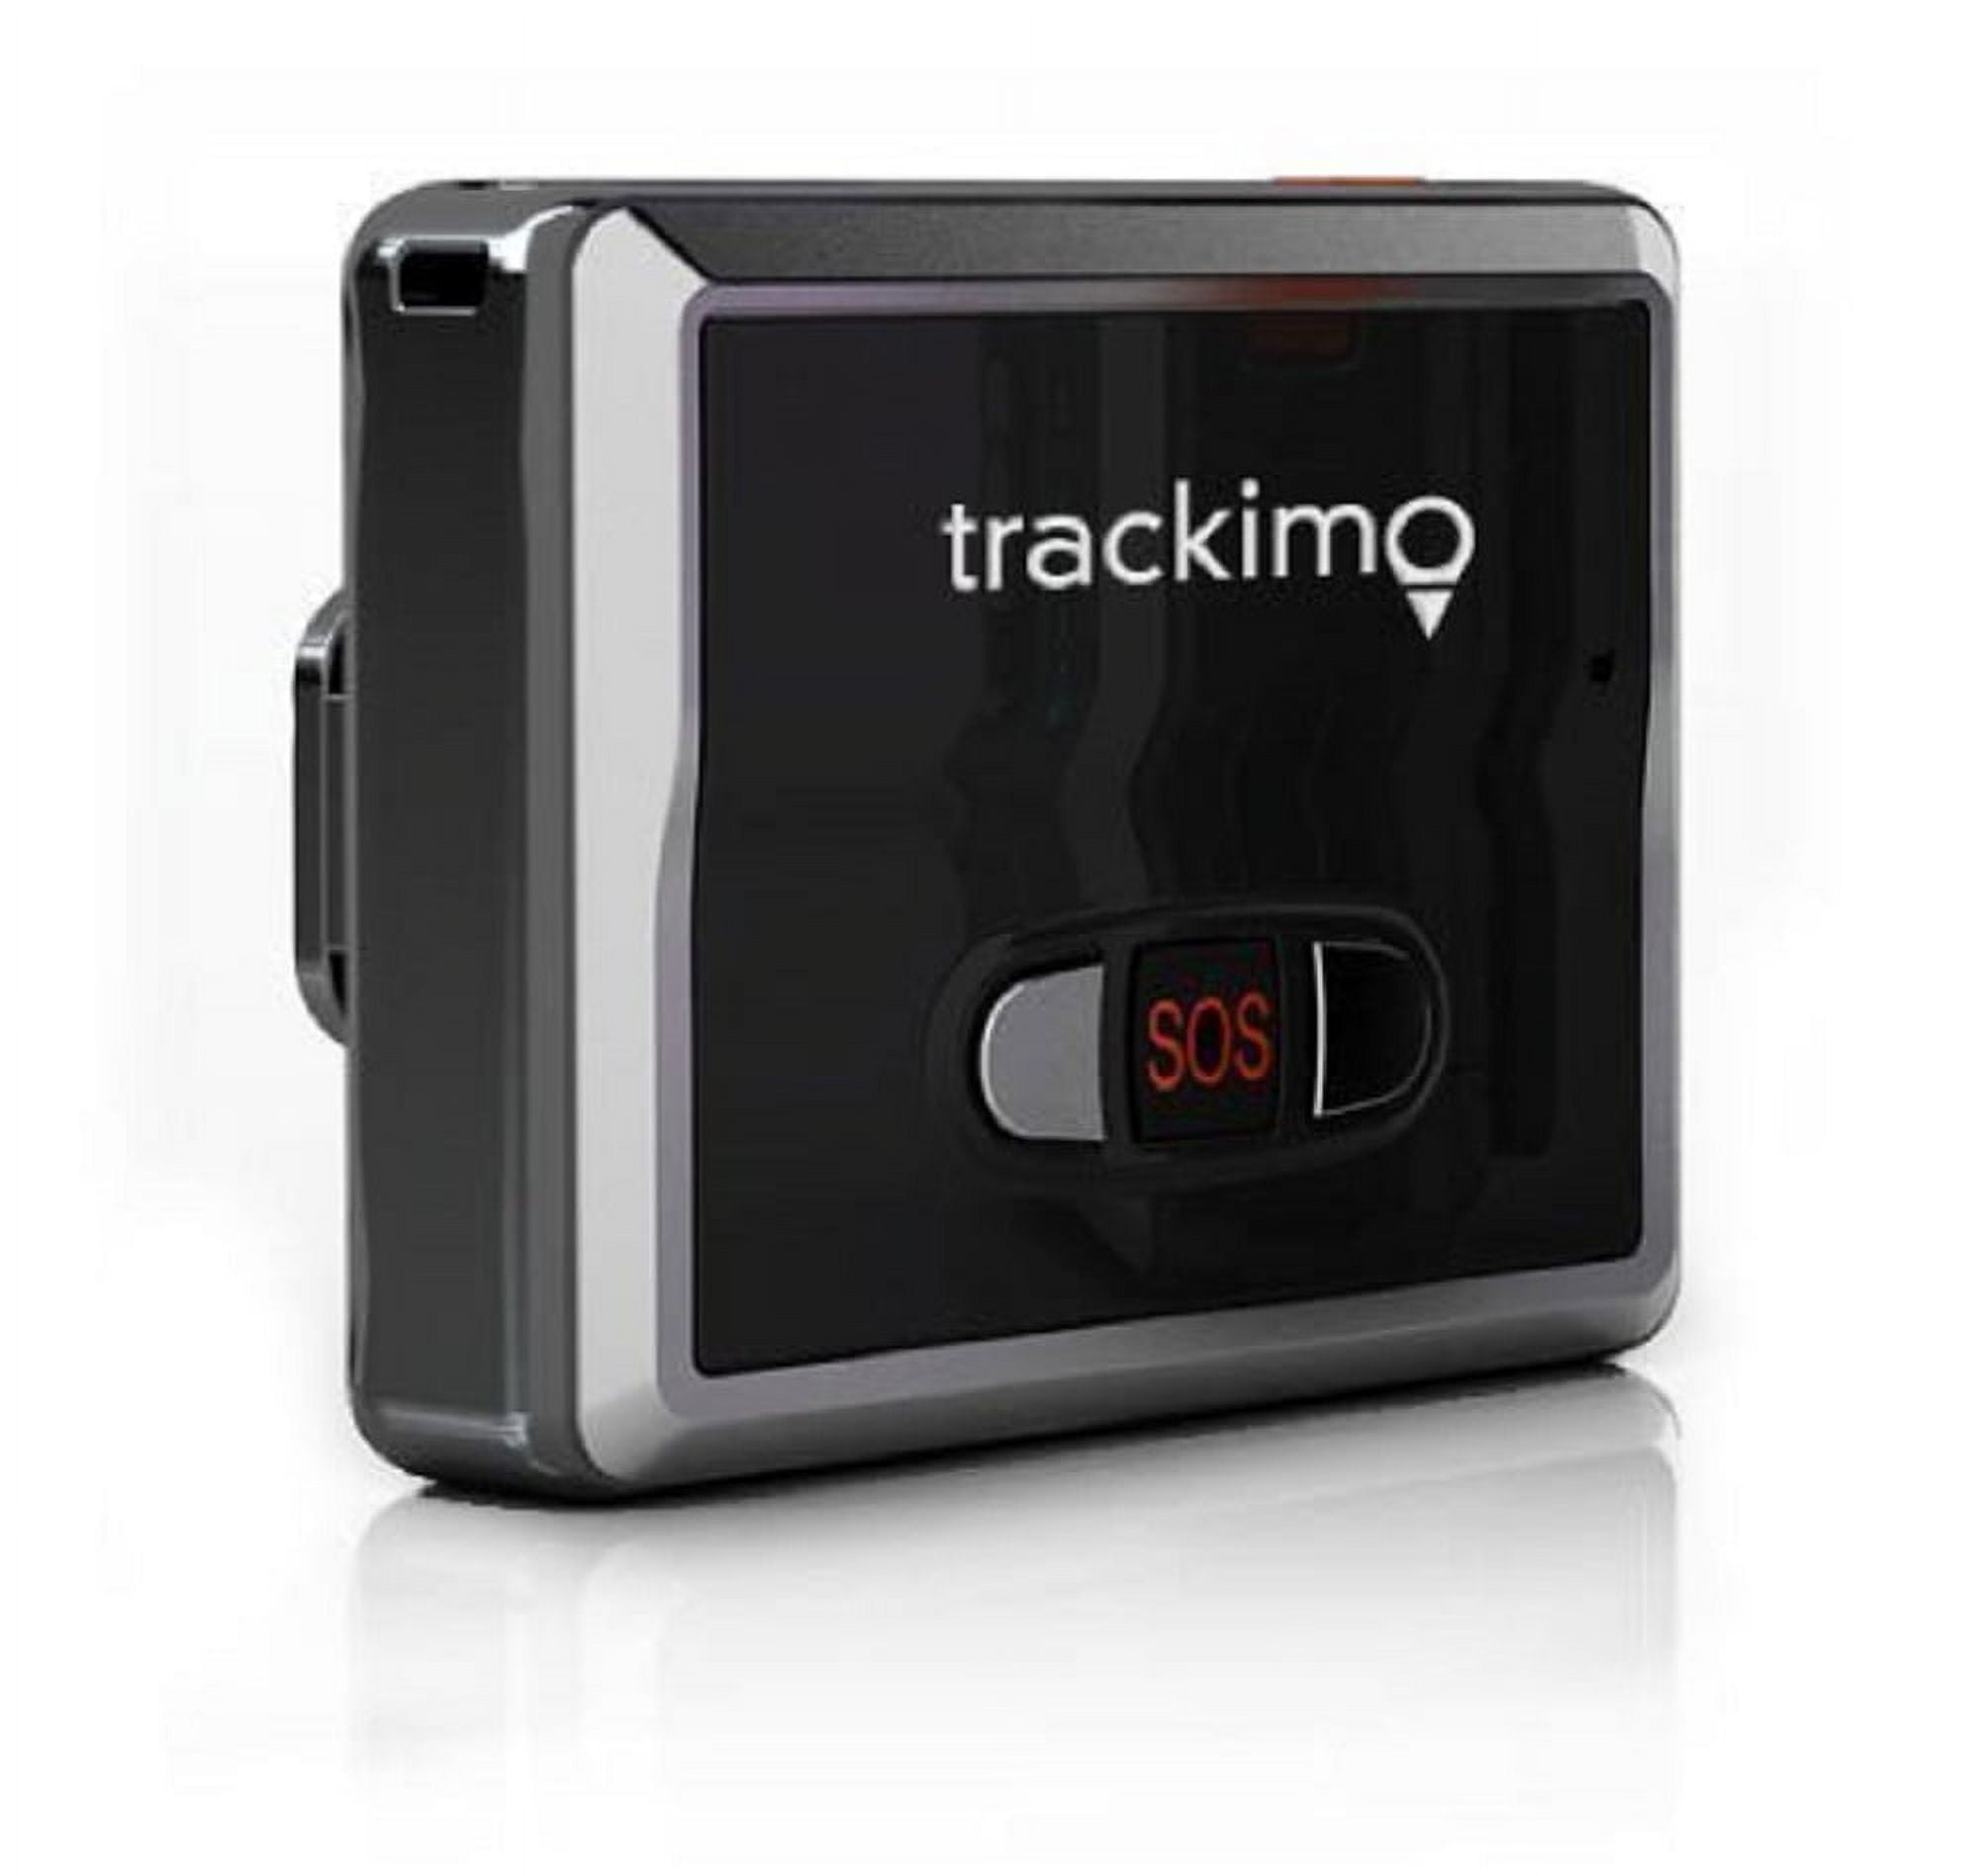 Ways To Detect GPS Device That Tracks You - Trackimo